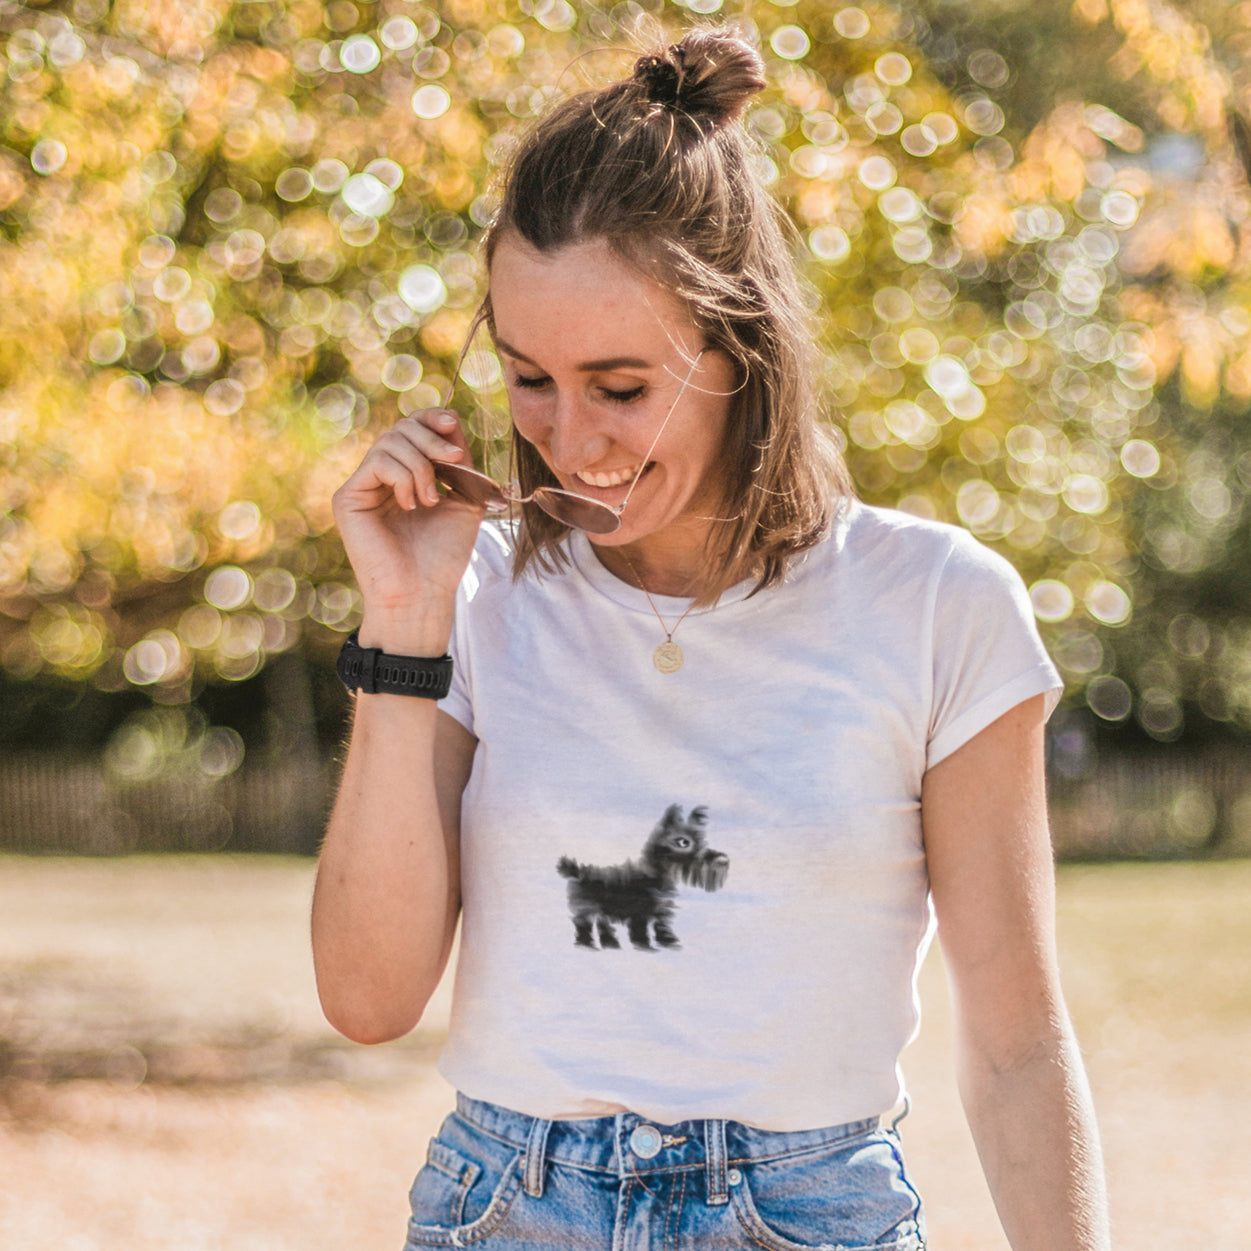 Scottie Dog | Women's 100% Organic Cotton T Shirt worn by a woman